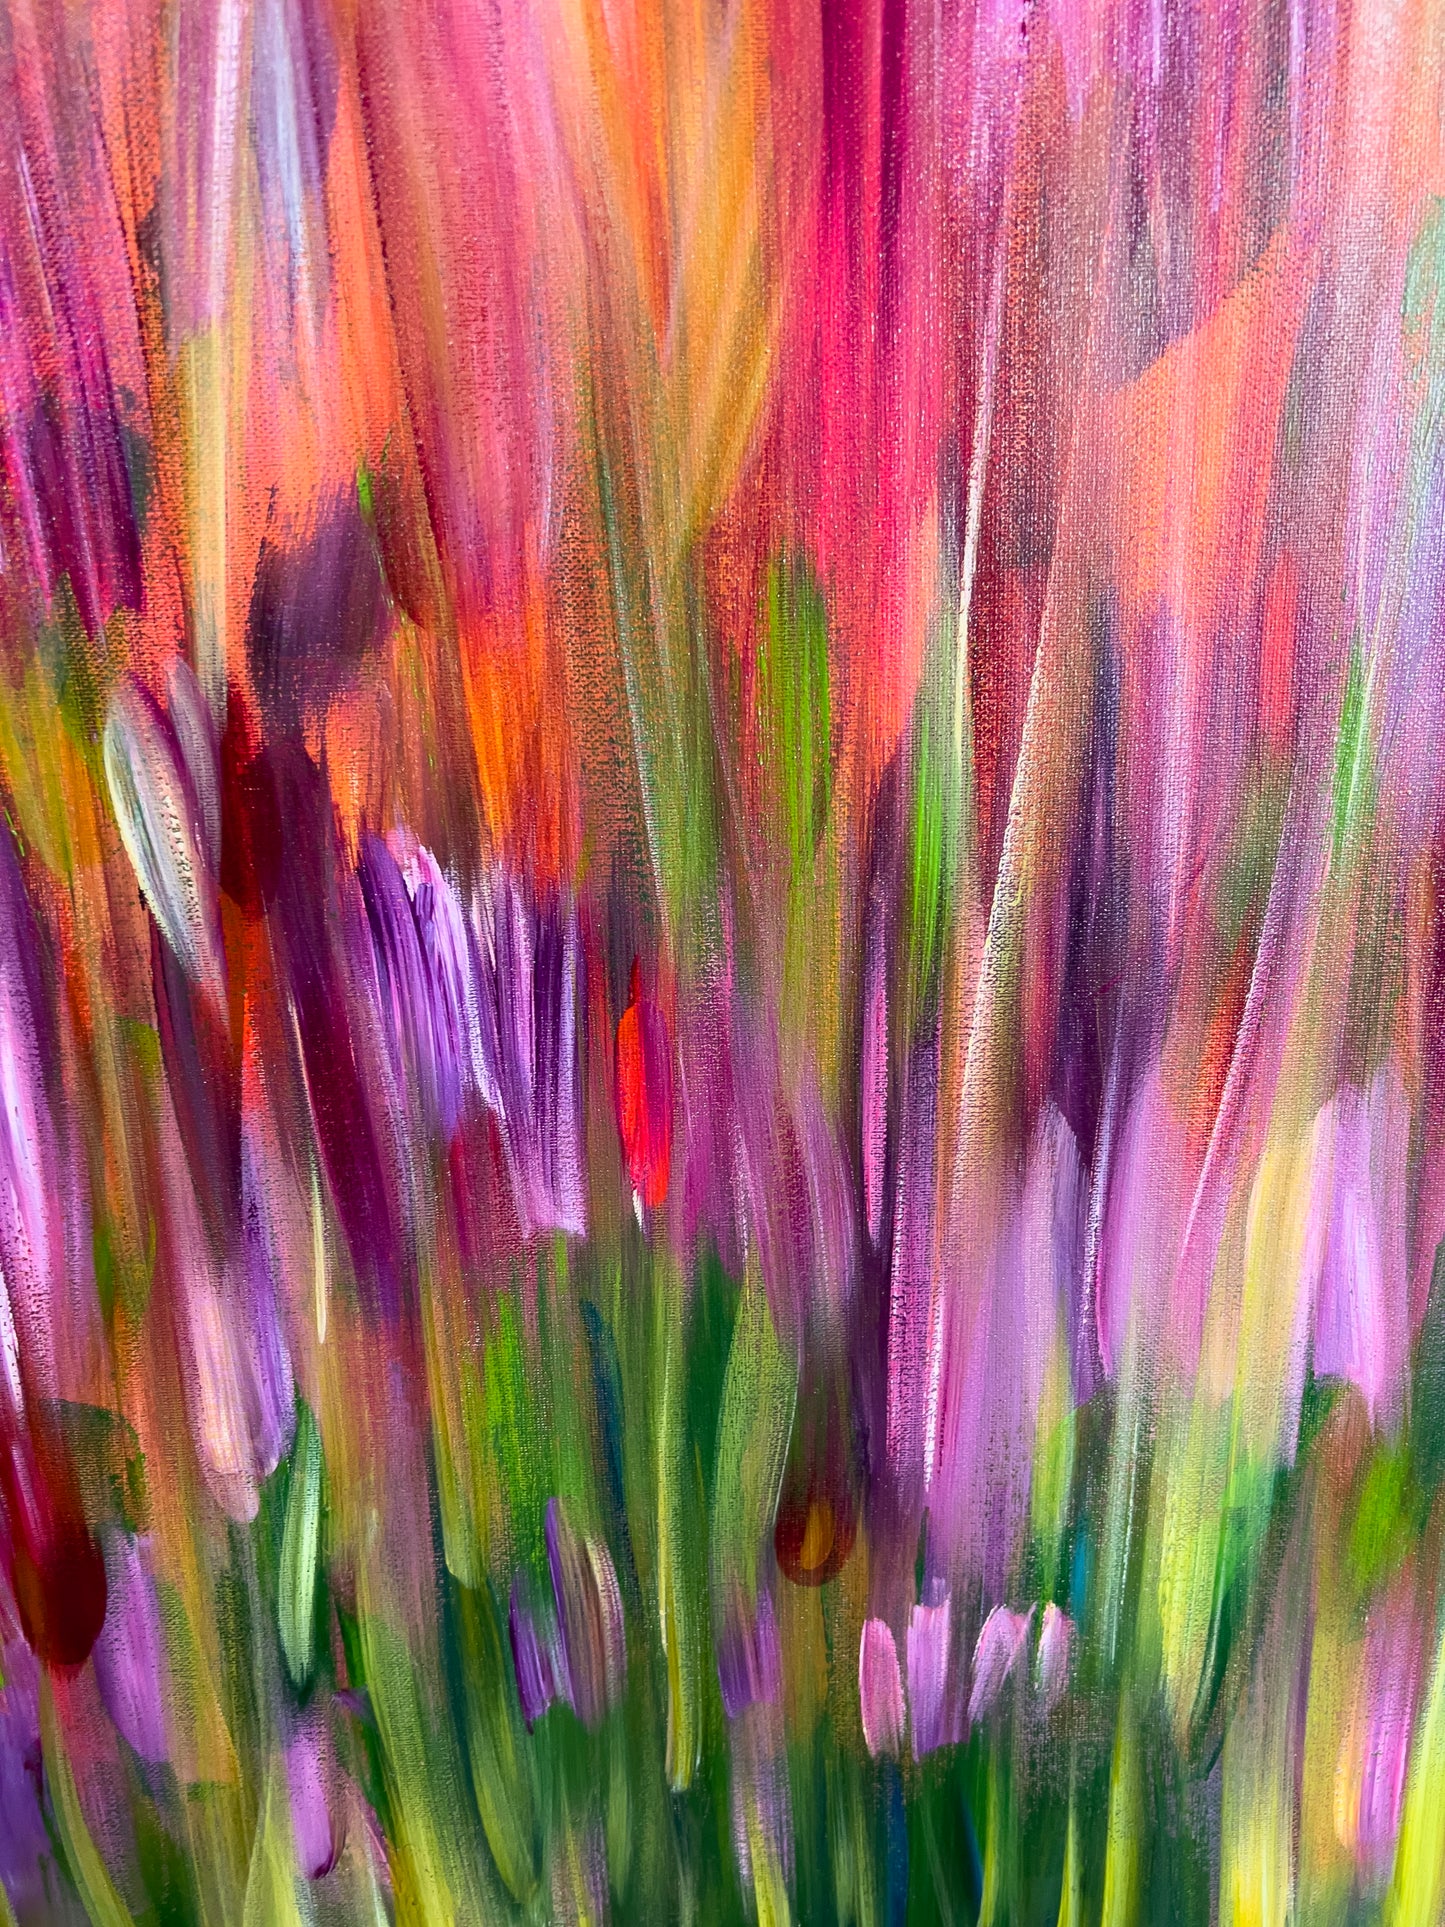 ORIGINAL ART: Tulips at Dusk 48x36 Painting